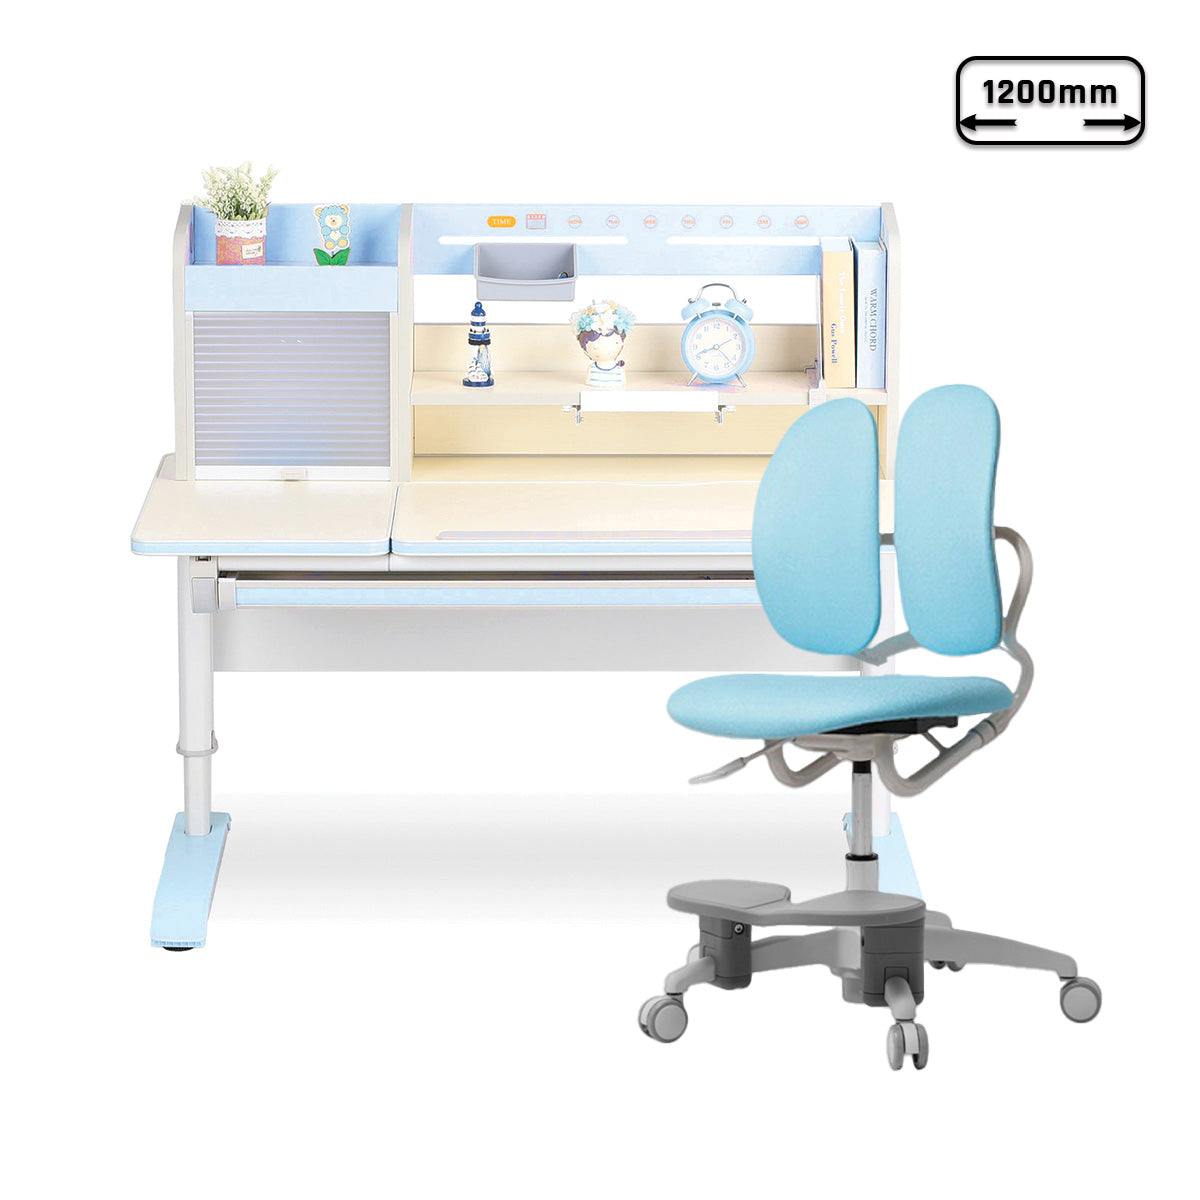 (Pre-Order) IMPACT Ergo-Growing Kids Study Desk And Chair Set 1200mm x 700mm, IM-D12L1200V2-BL